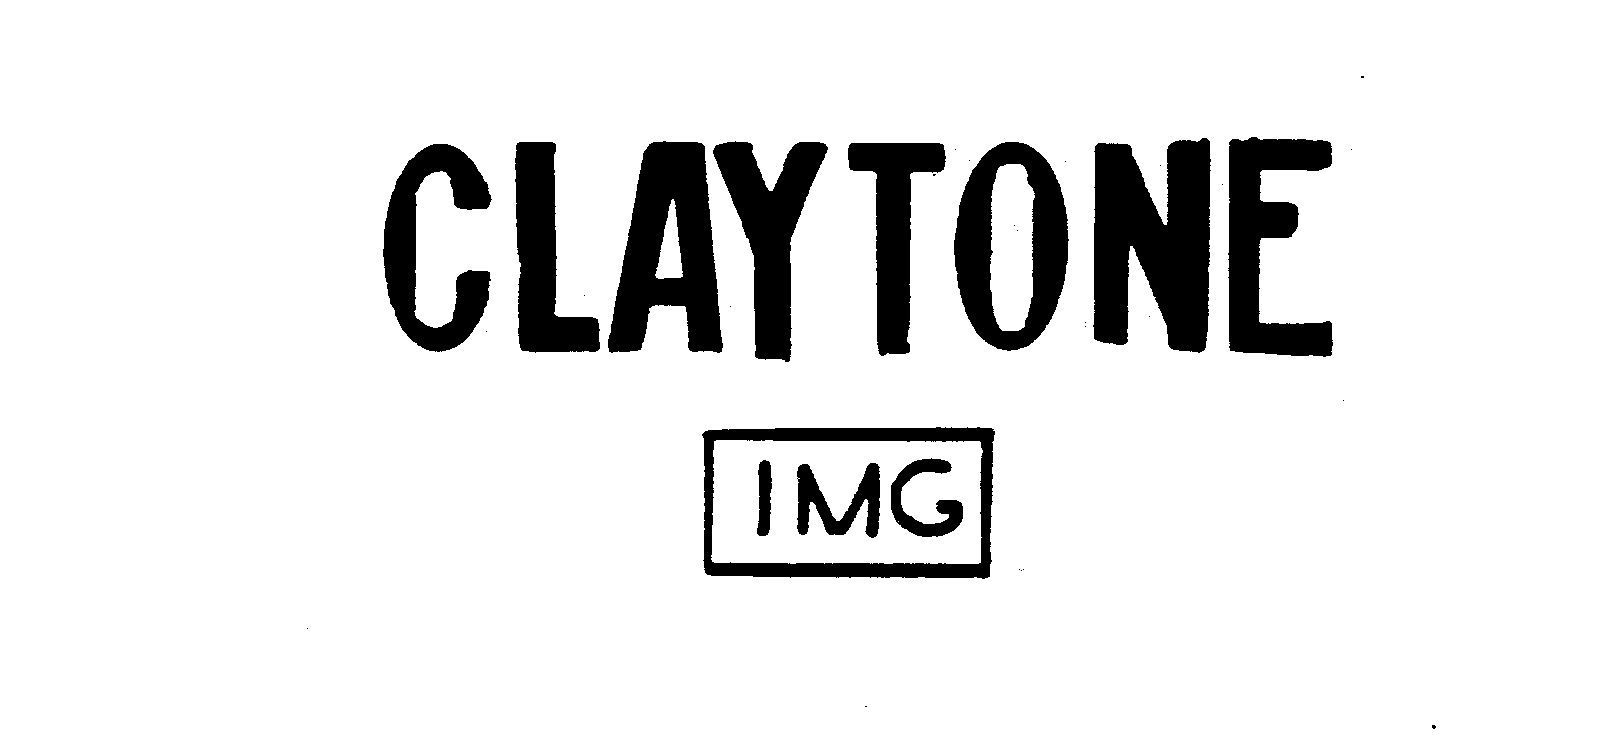  CLAYTONE IMG